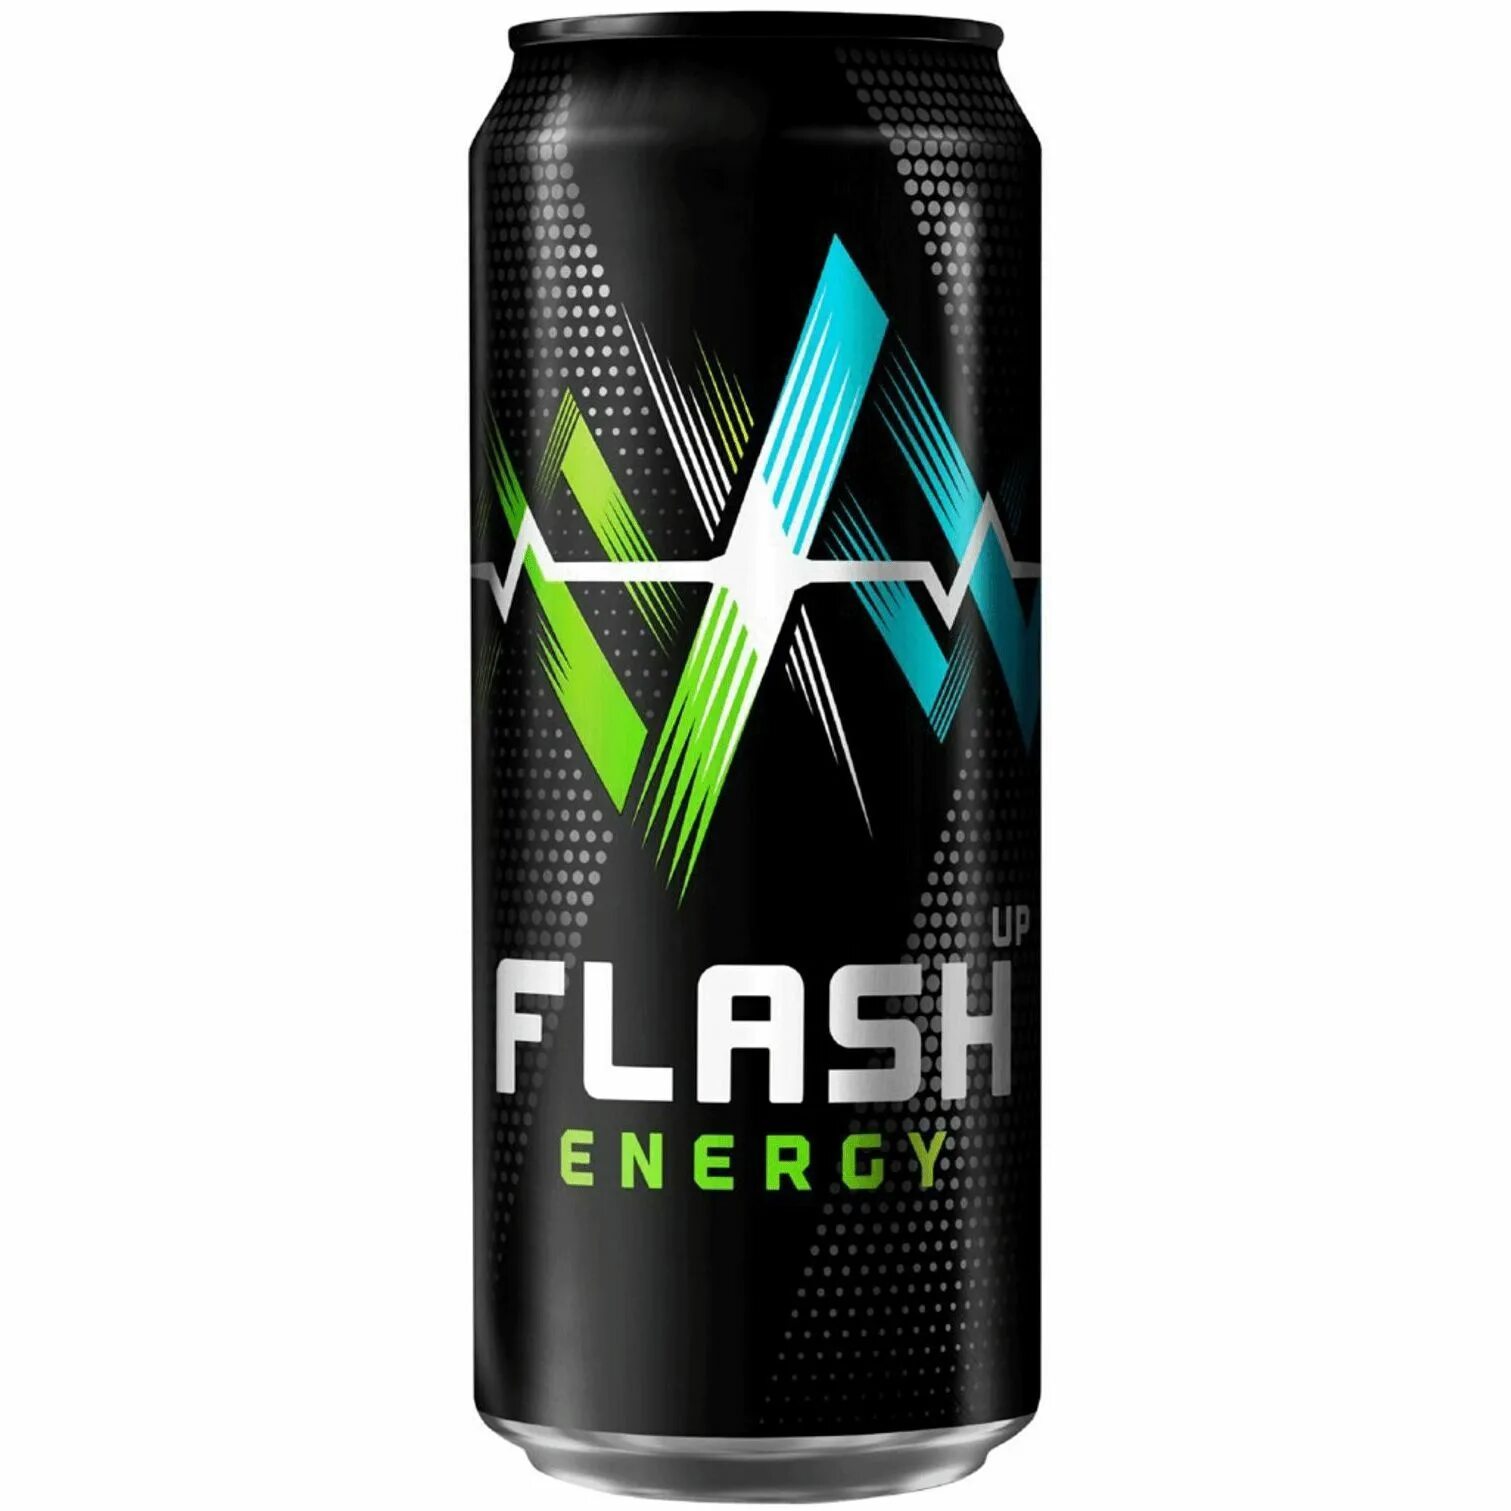 Flash mix. Flash up Energy ультра 0,45л ж/б *24. Энергетический напиток Flash up Energy Ultra ж/б. 0,45л. Энергетический напиток флэш ап 0,45 л. Энергетик флеш ап Энерджи.